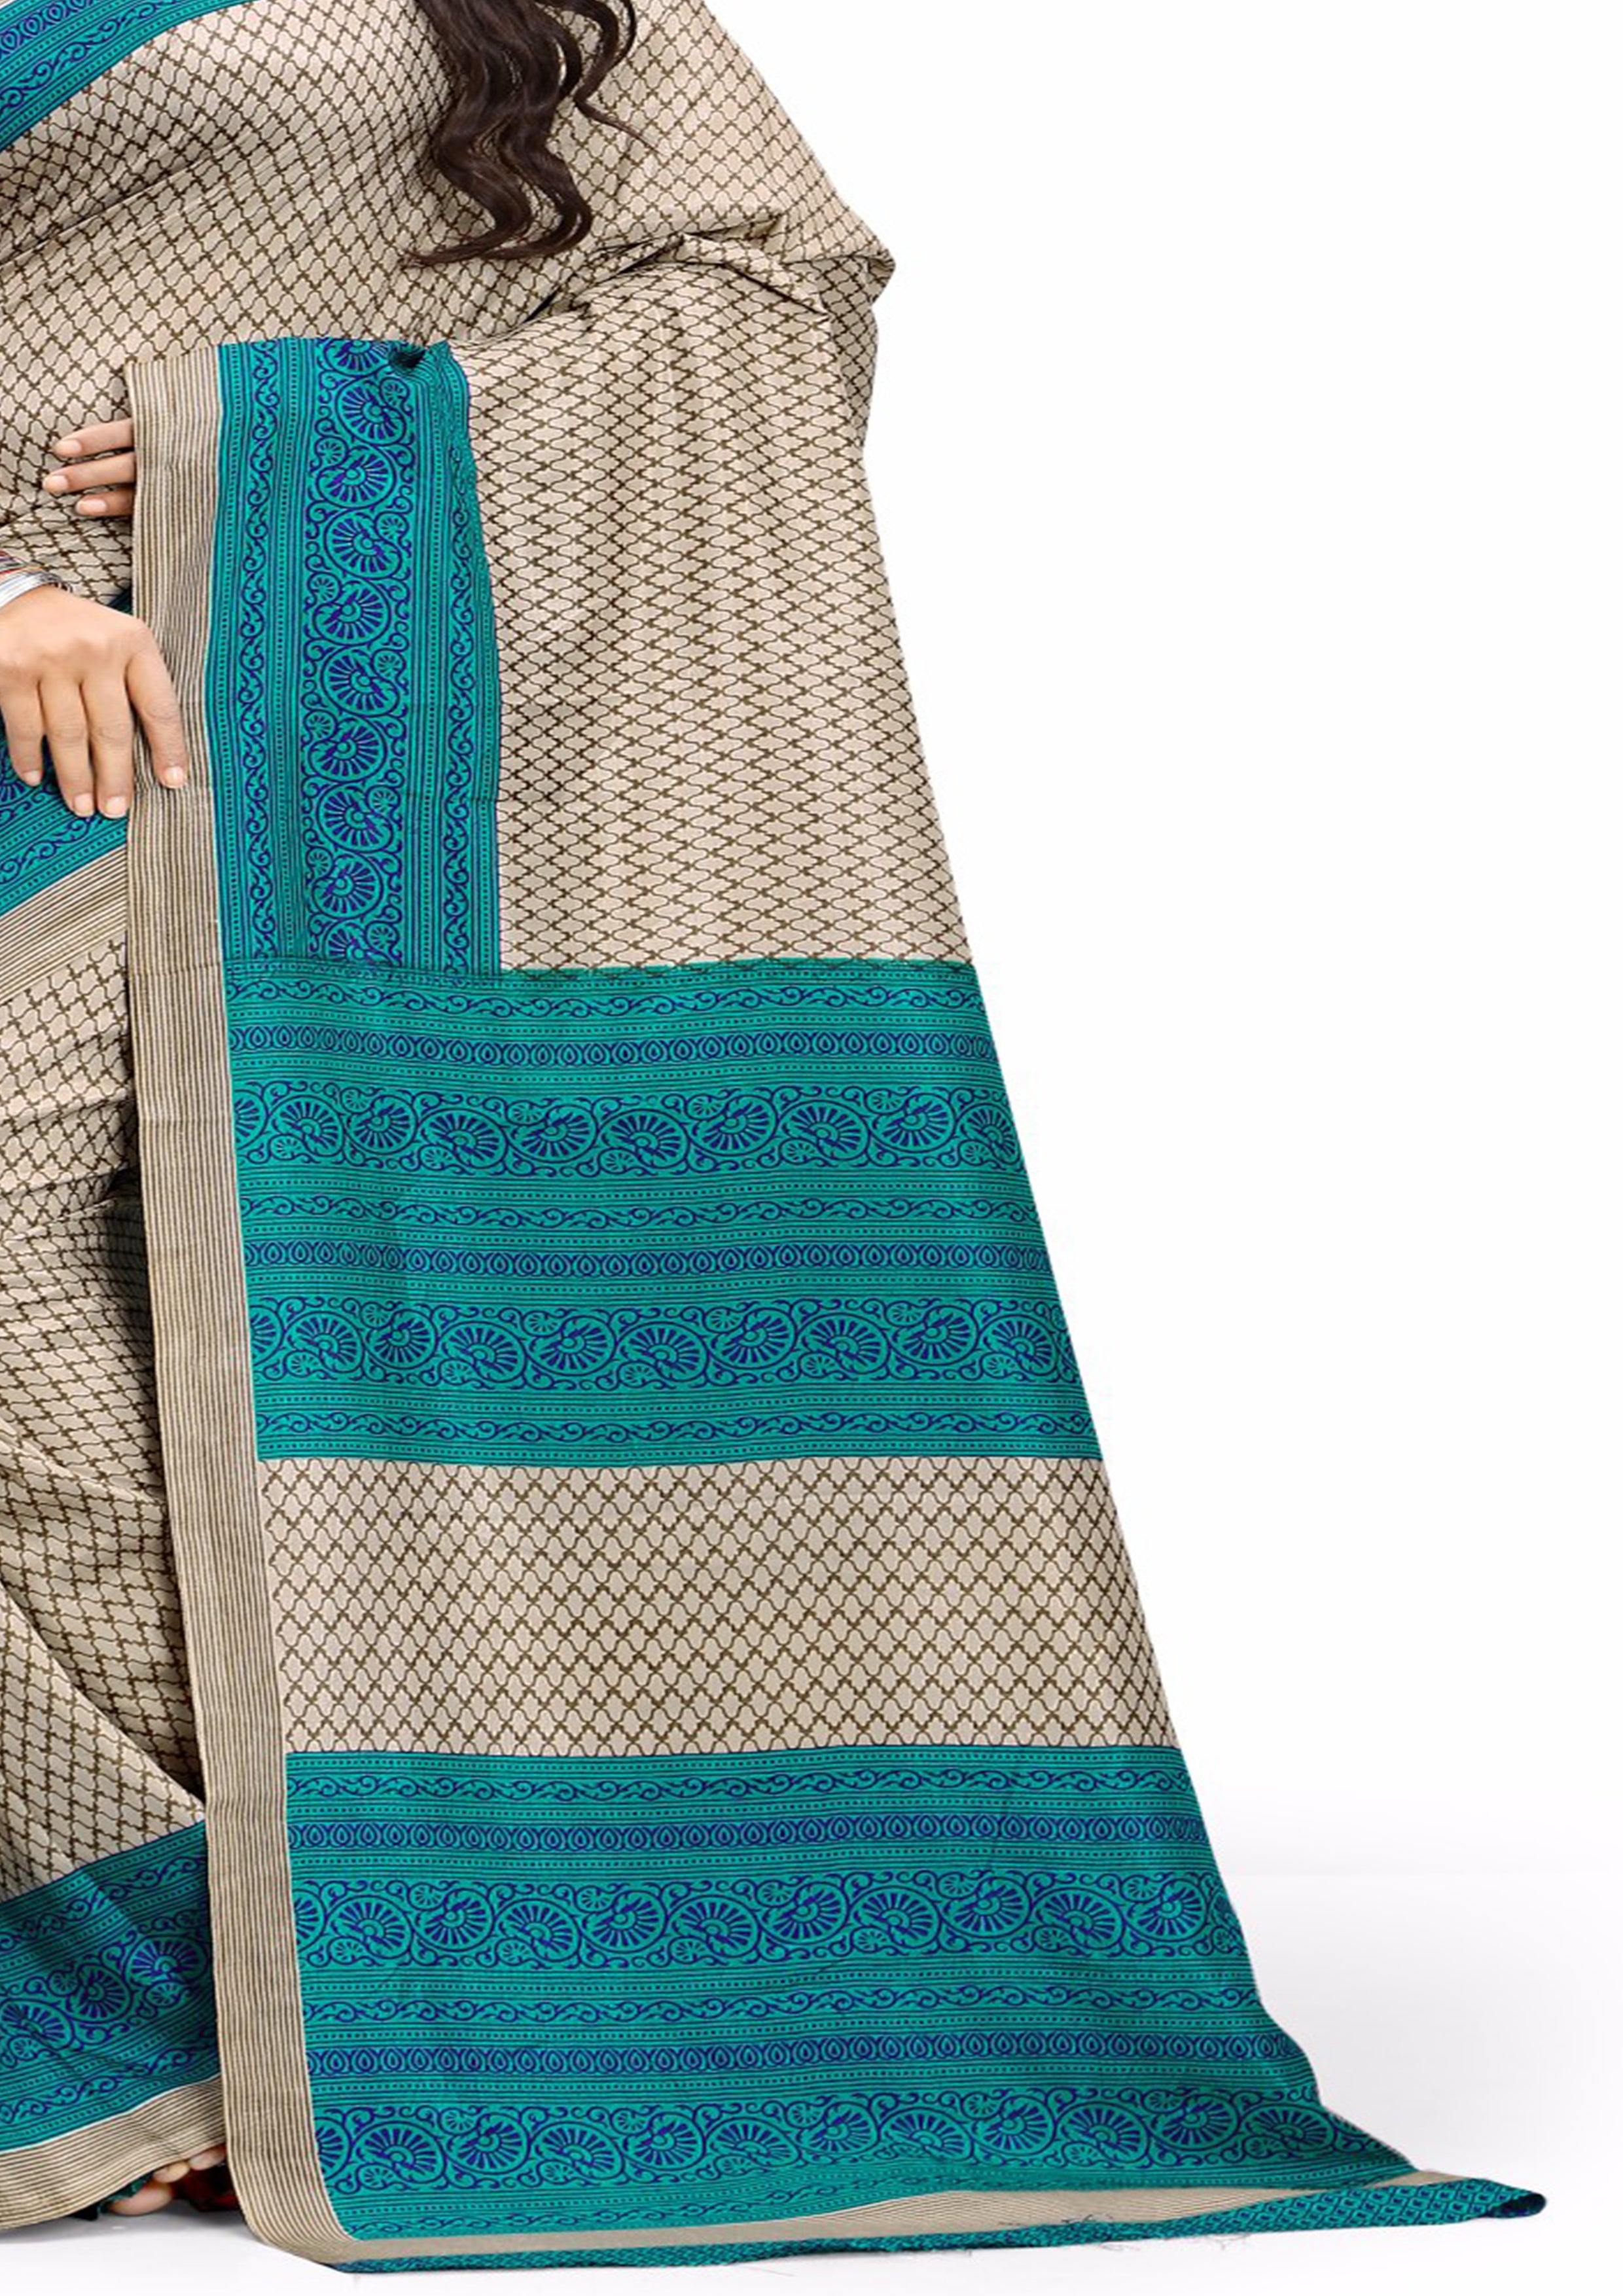 Vimla Women's Beige Malgudi Art Silk Uniform Saree with Blouse (2188_Beige)